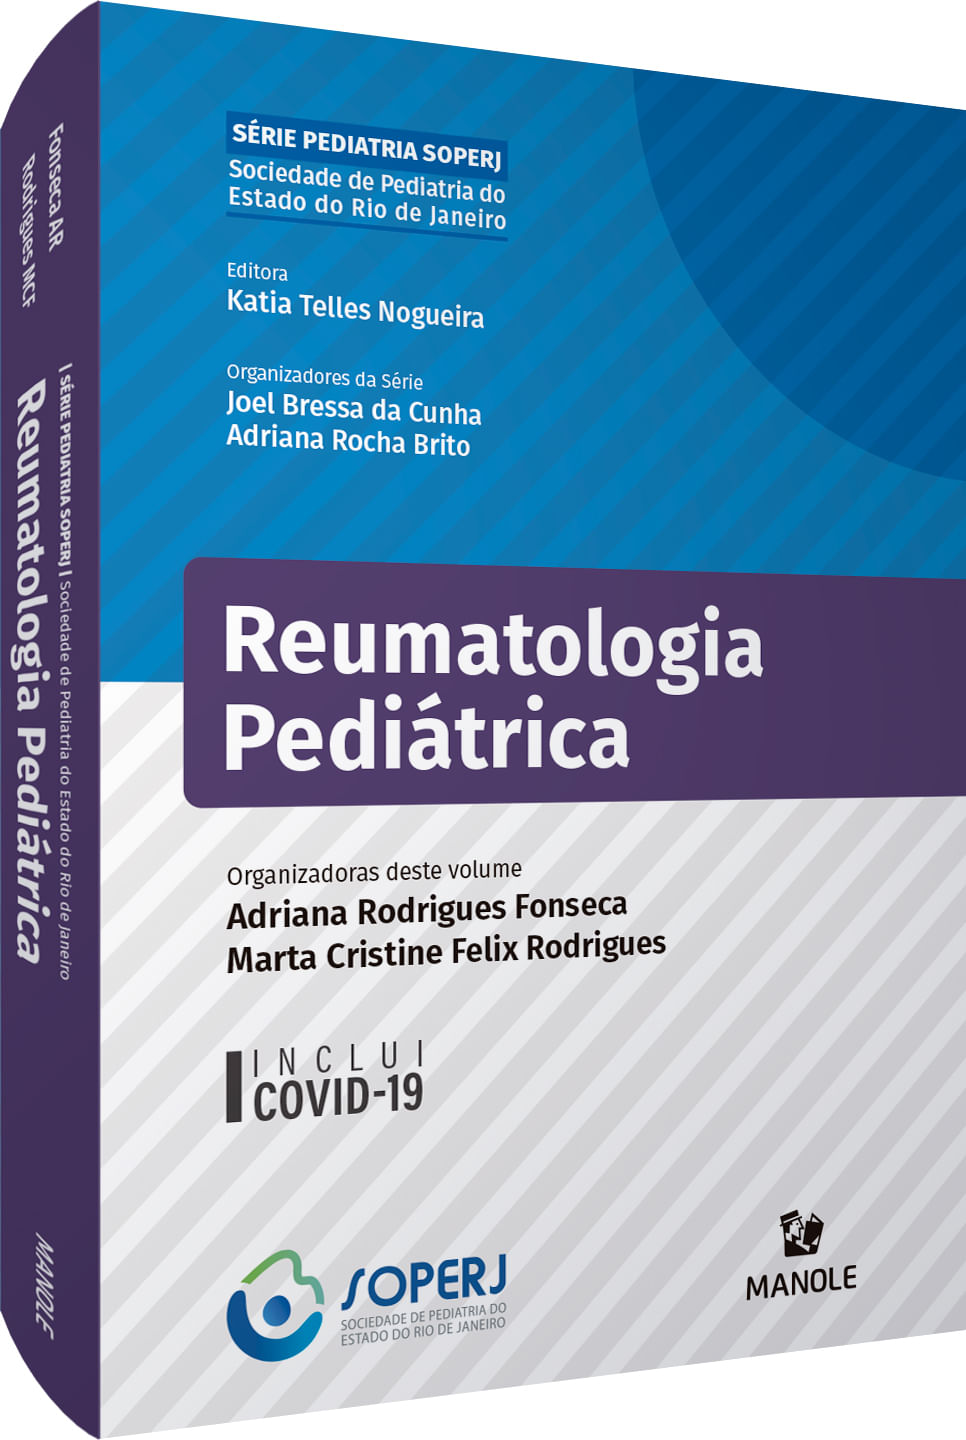 Reumatologia-Pediatrica-SOPERJ_FINAL--1-